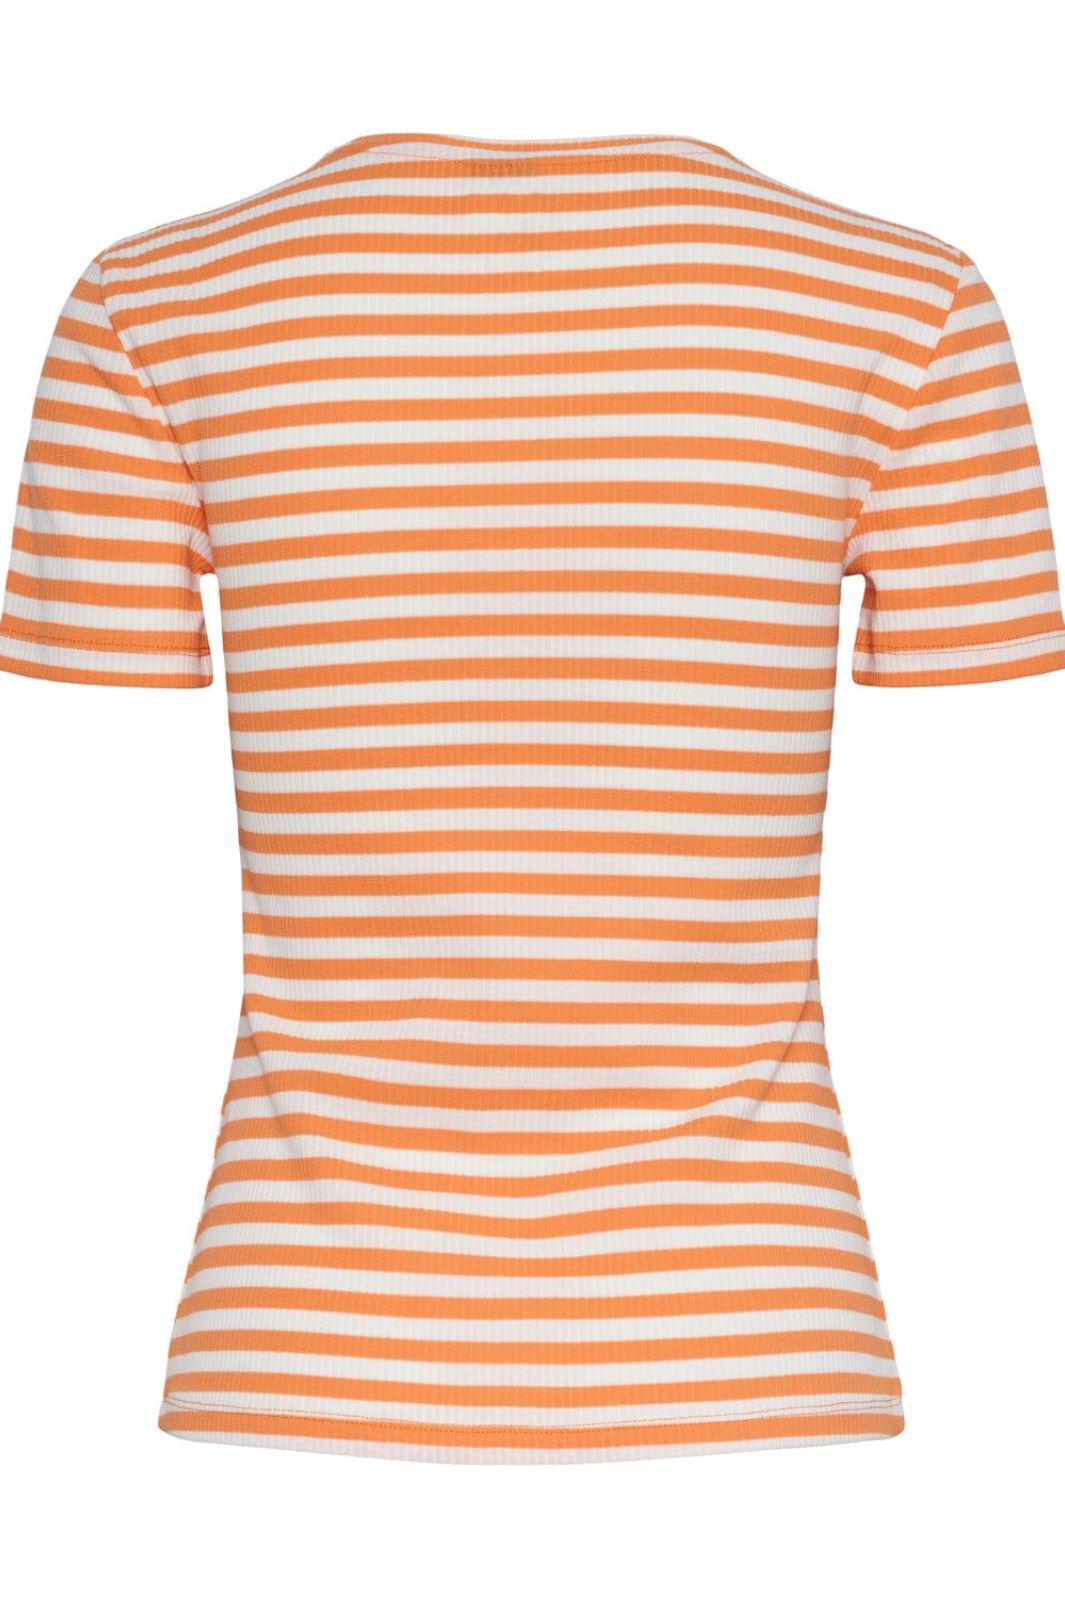 Pieces - Pcruka Ss Top - 4383233 Tangerine Cloud Dancer T-shirts 